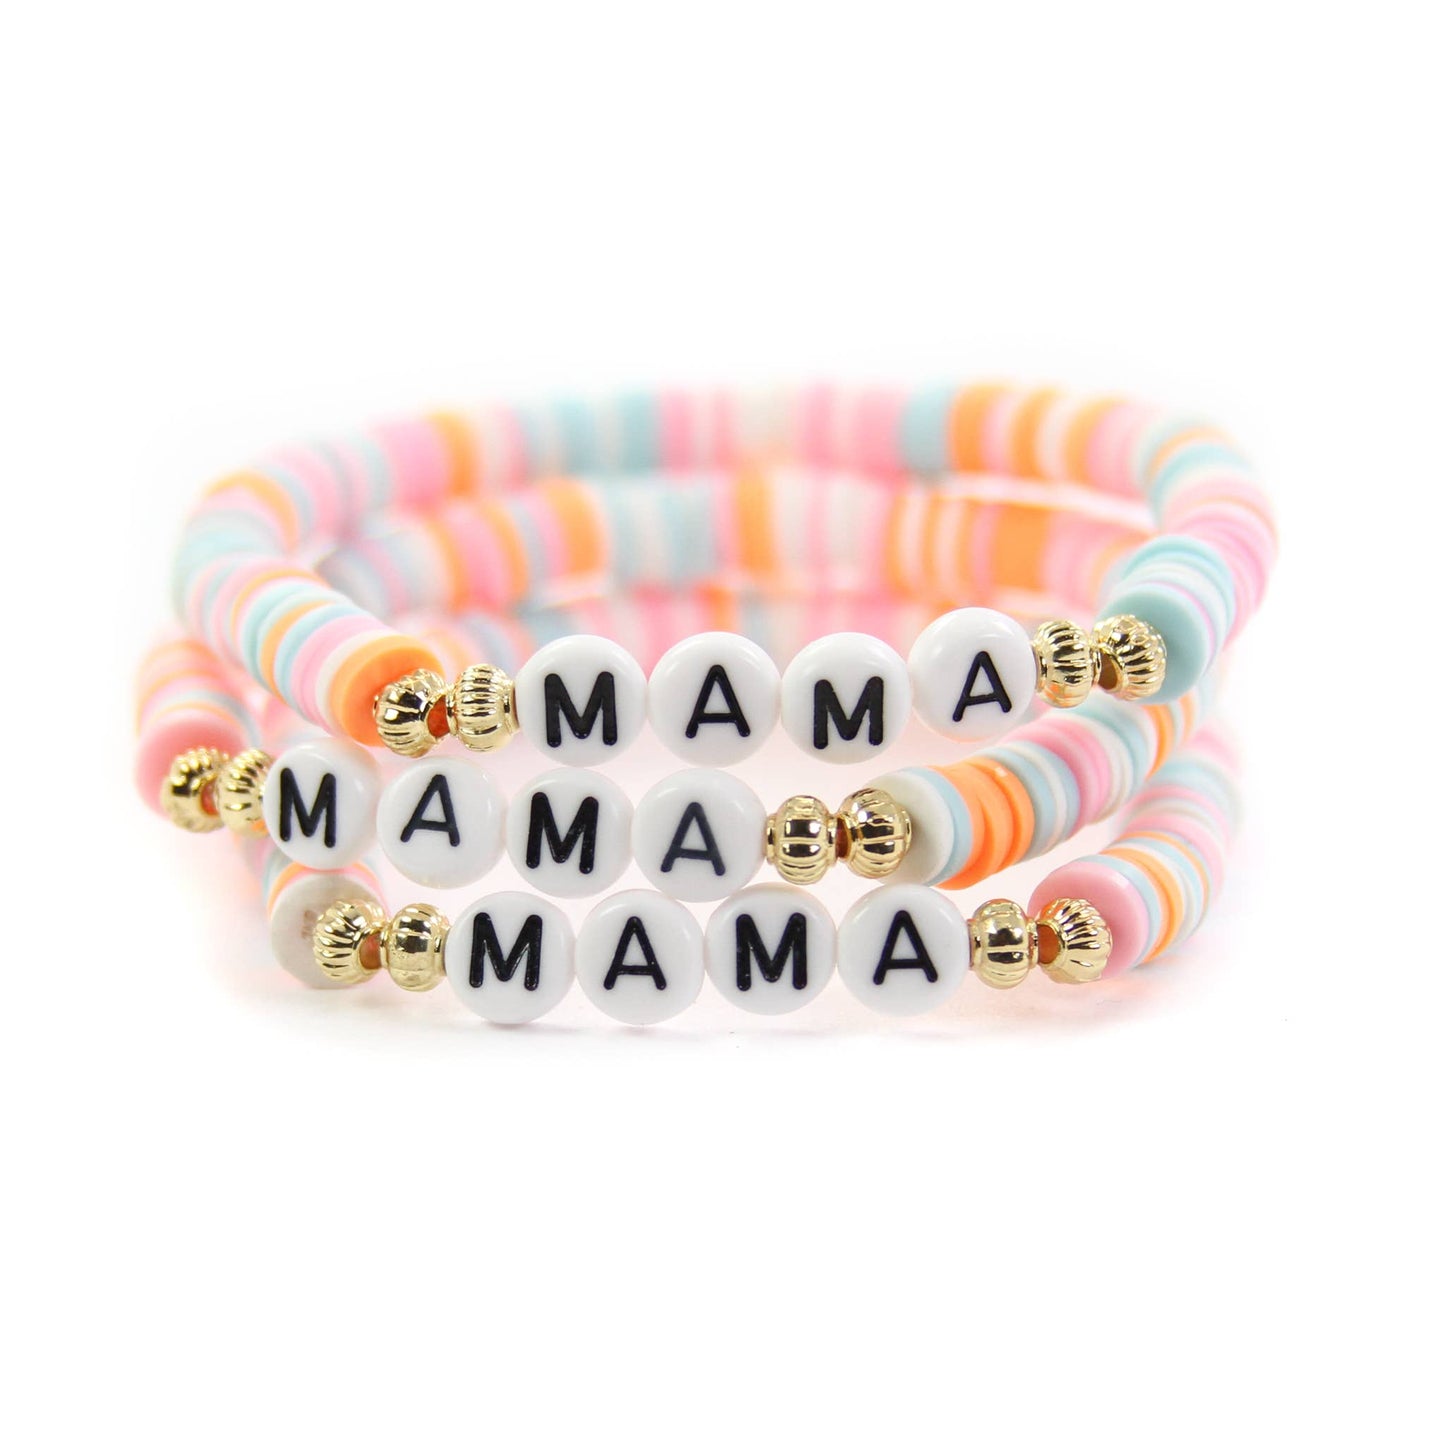 Mama Bracelet- Spring Heishi Bracelet